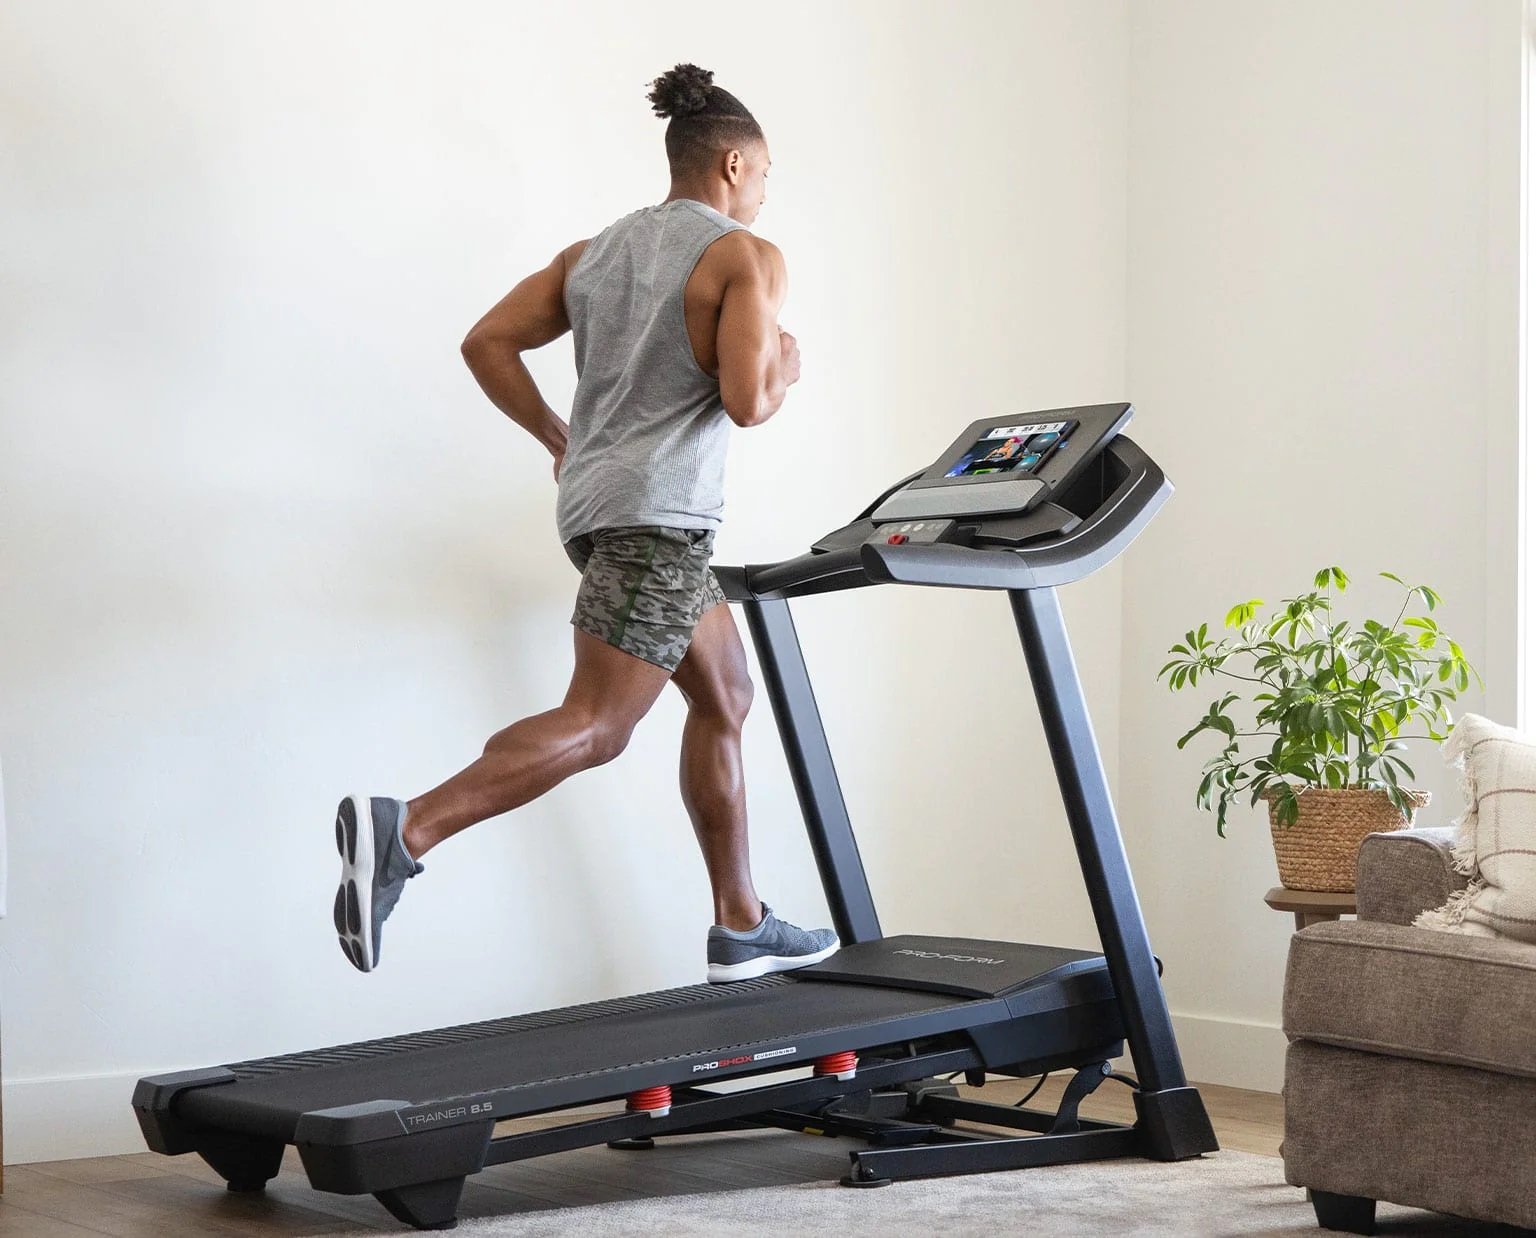 ProForm Trainer 8.5 Treadmill Review Maximizing Longevity, Safety, and Performance